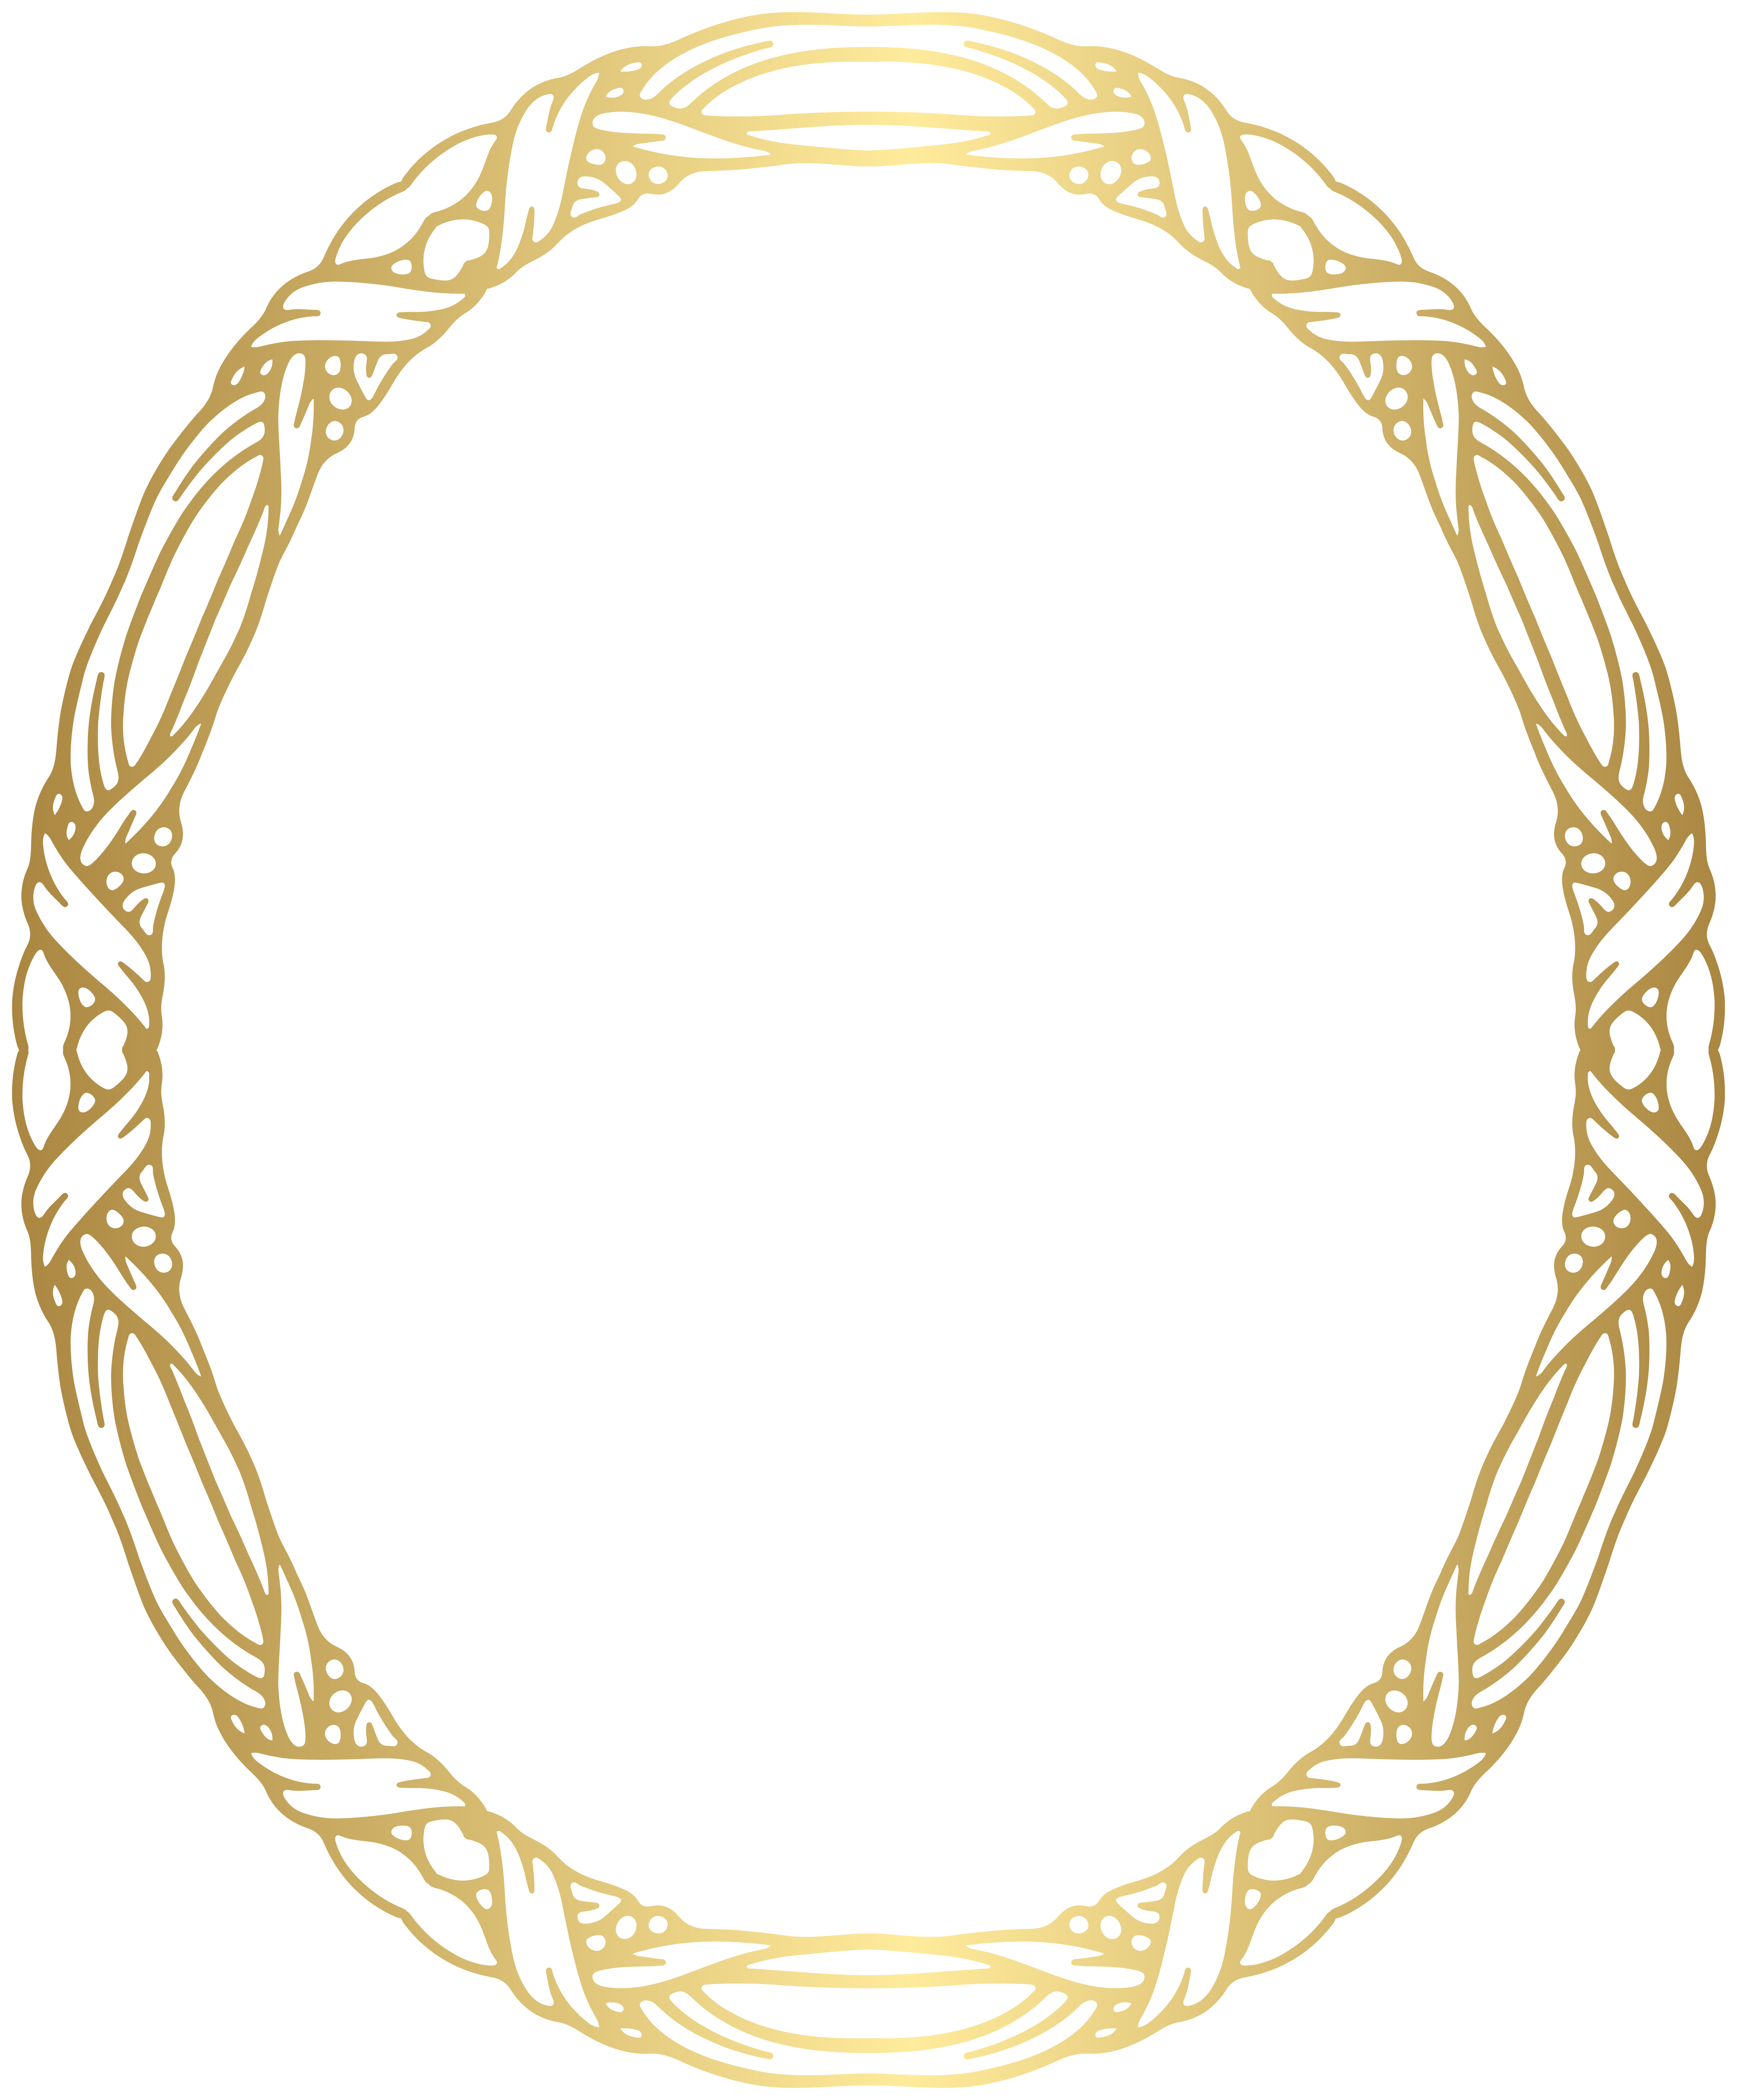 oval frames clip art